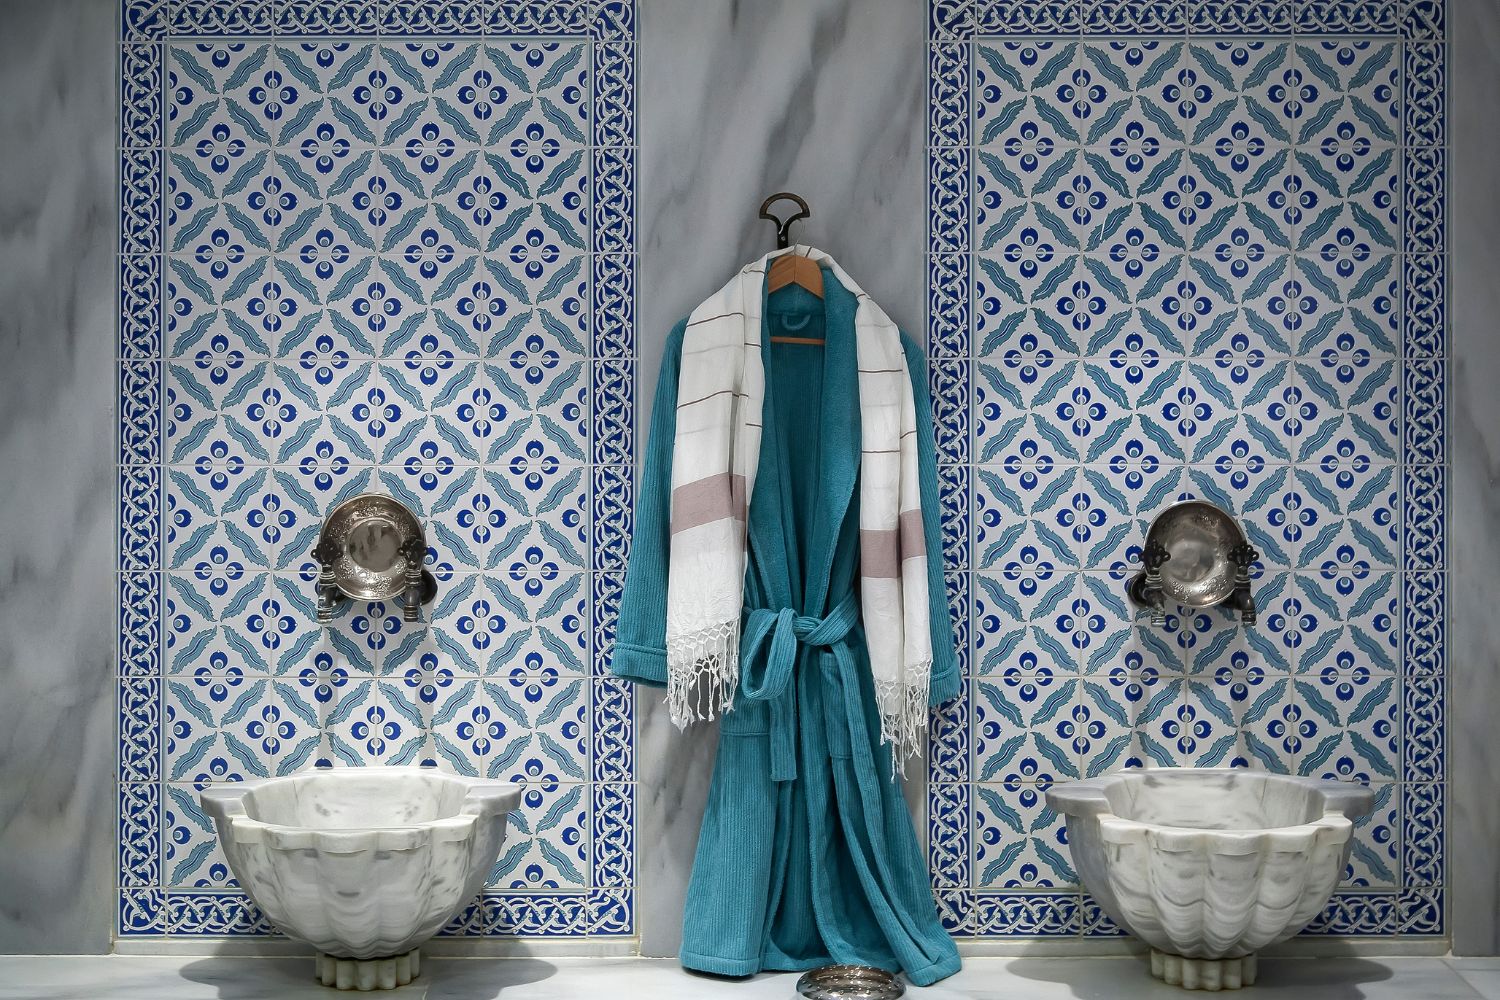 A bathrobe and towel in a Hammam